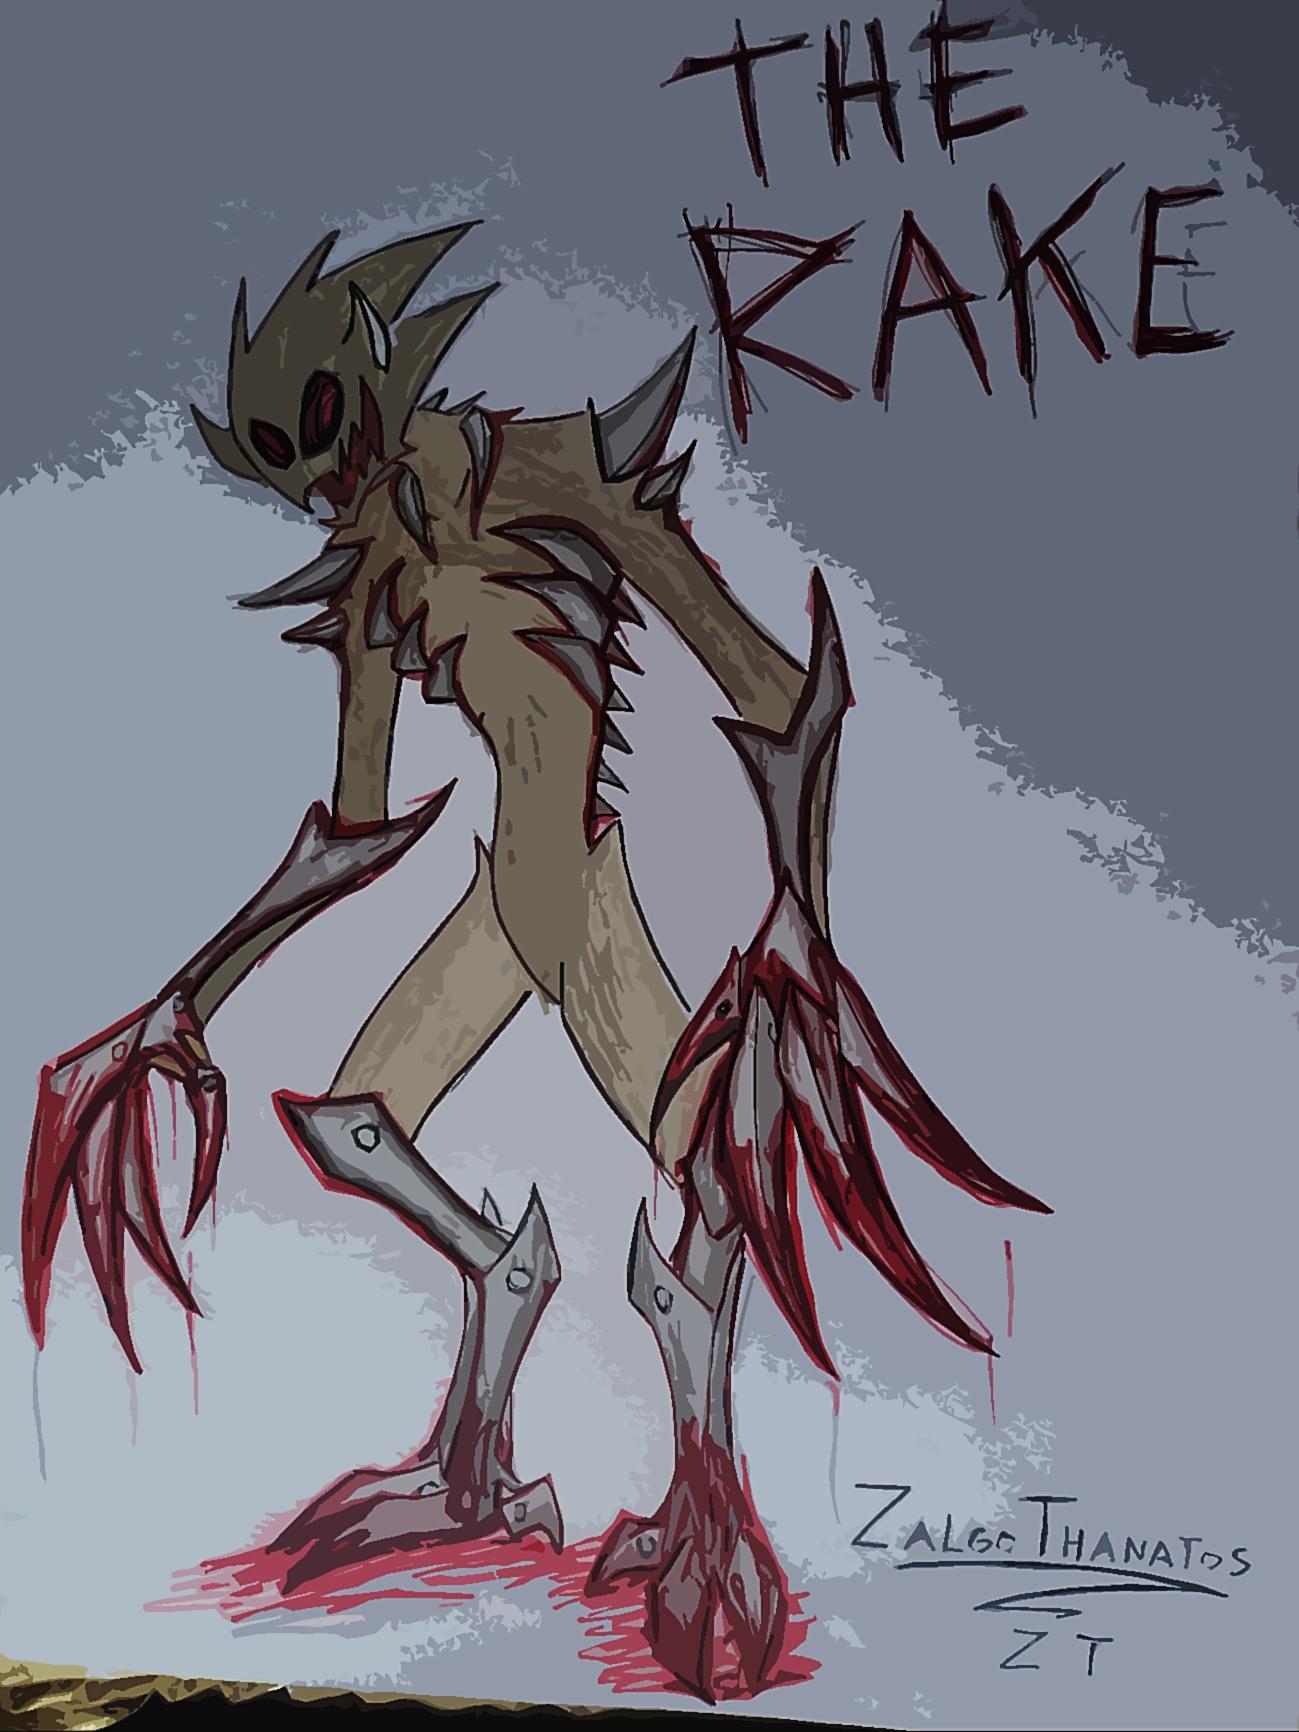 The Rake by raulovsky on DeviantArt  Rake creature, Life art, Horror art